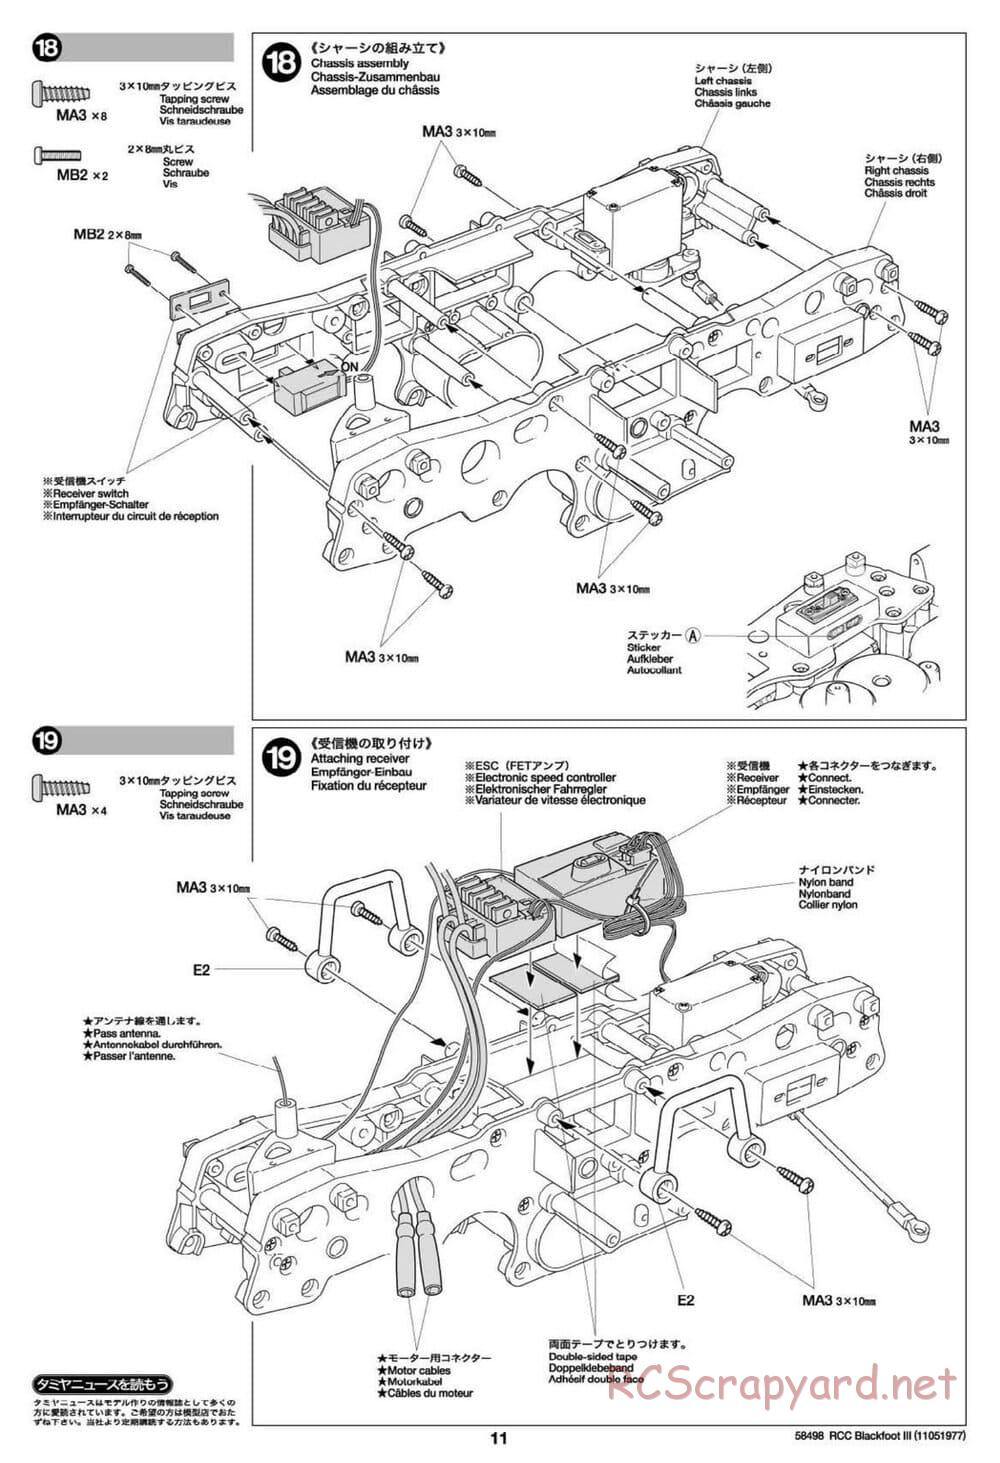 Tamiya - Blackfoot III - WT-01 Chassis - Manual - Page 11